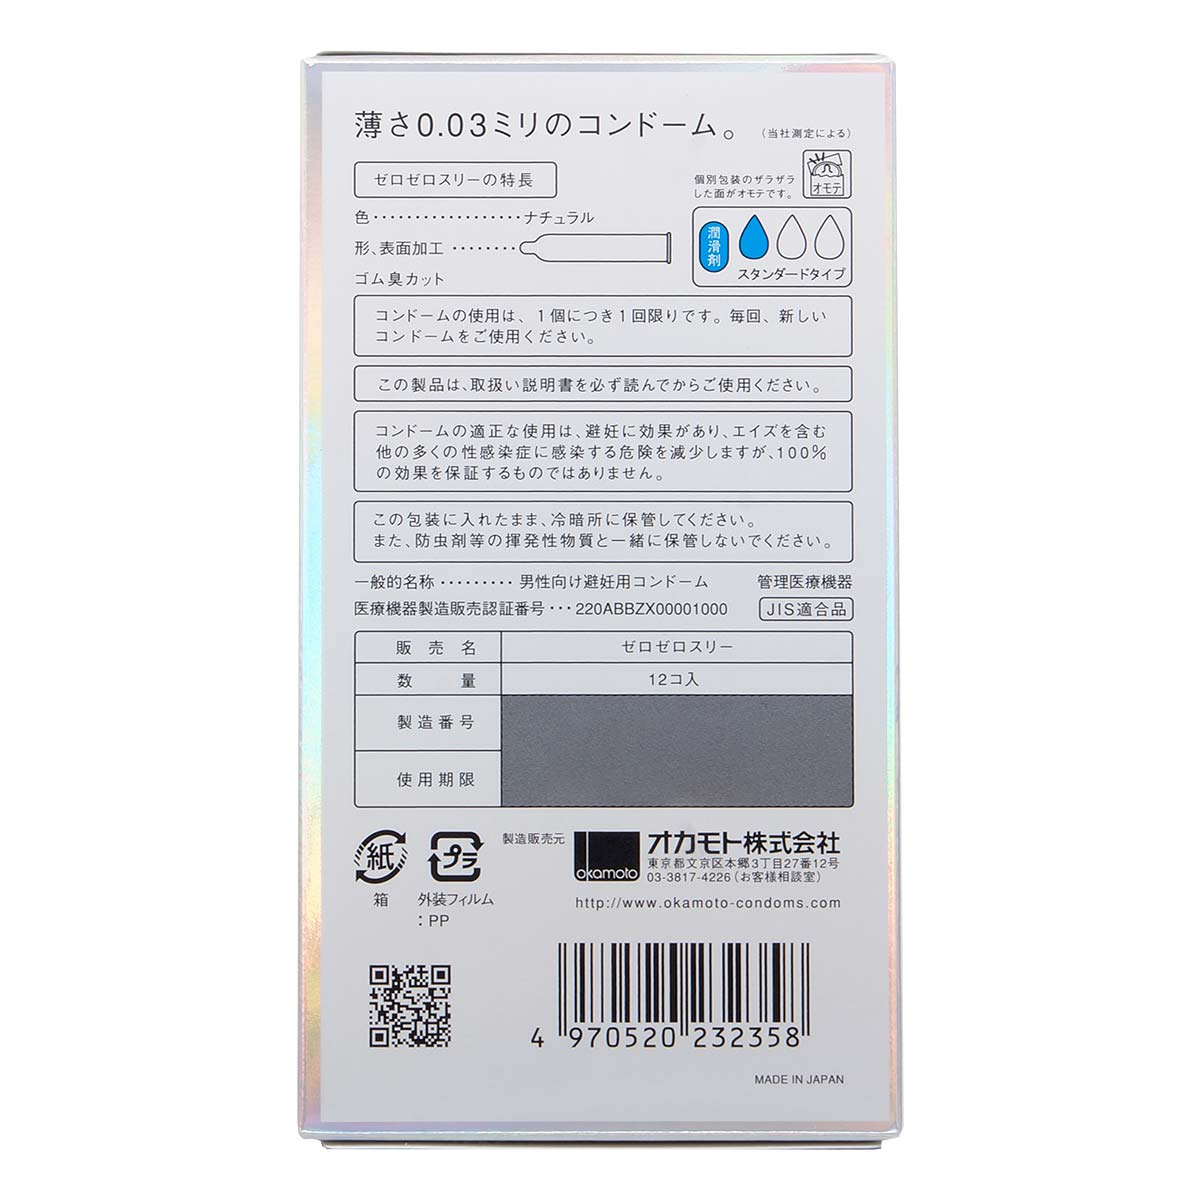 Zero Zero Three 0.03 (Japan Edition) 12's Pack Latex Condom (Short Expiry)-p_3